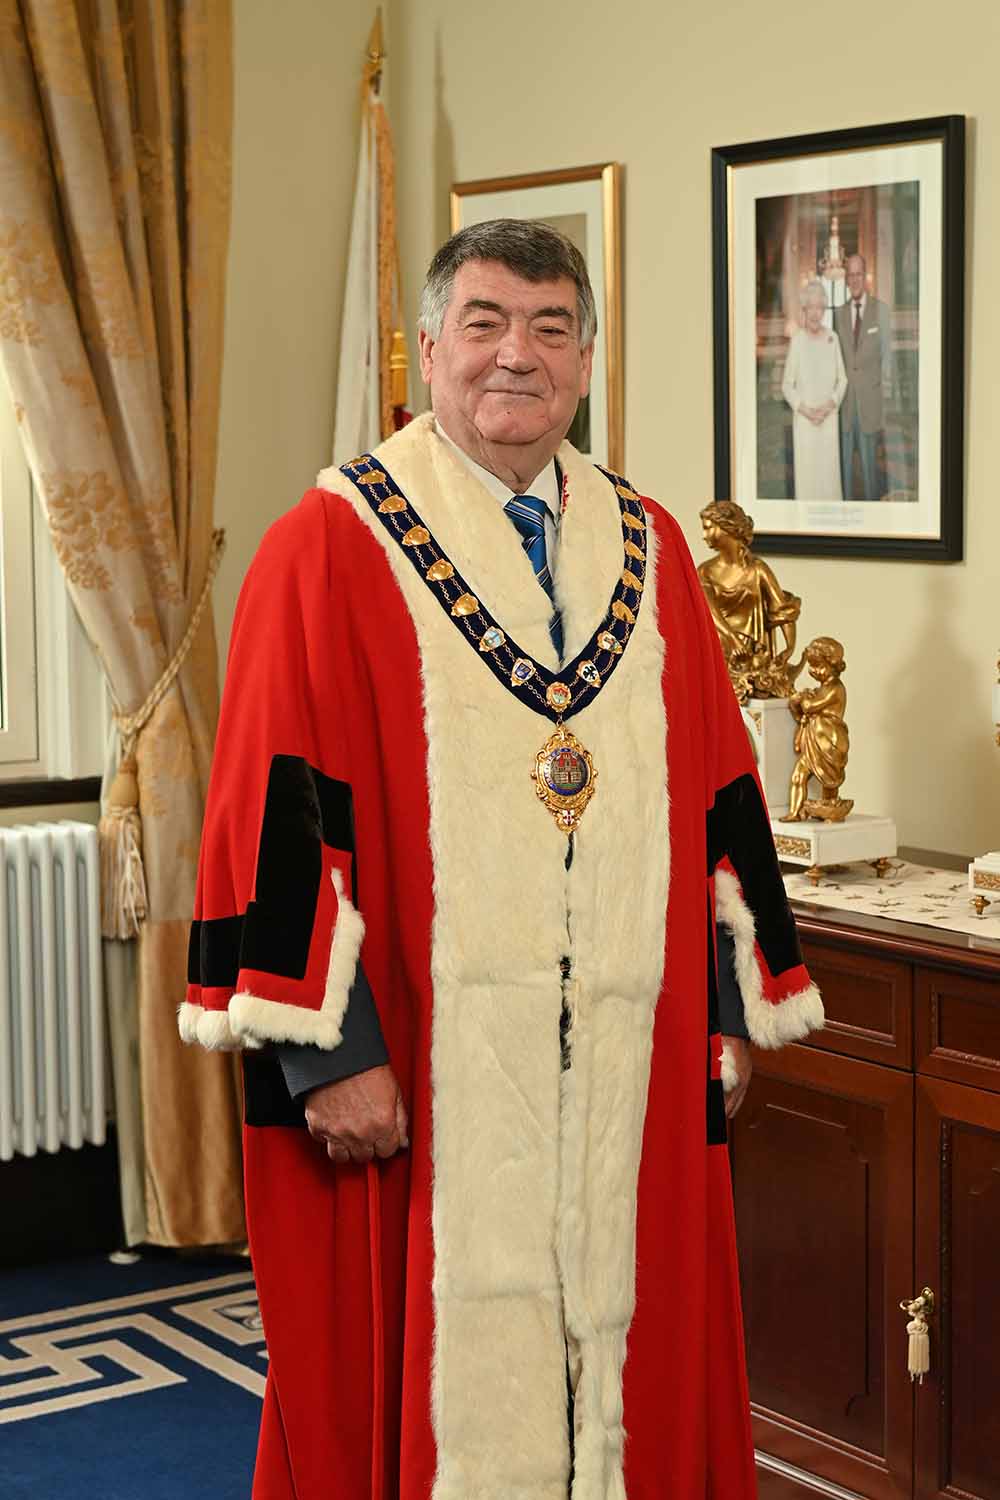 Mayor of Mid and East Antrim, Alderman Noel Williams